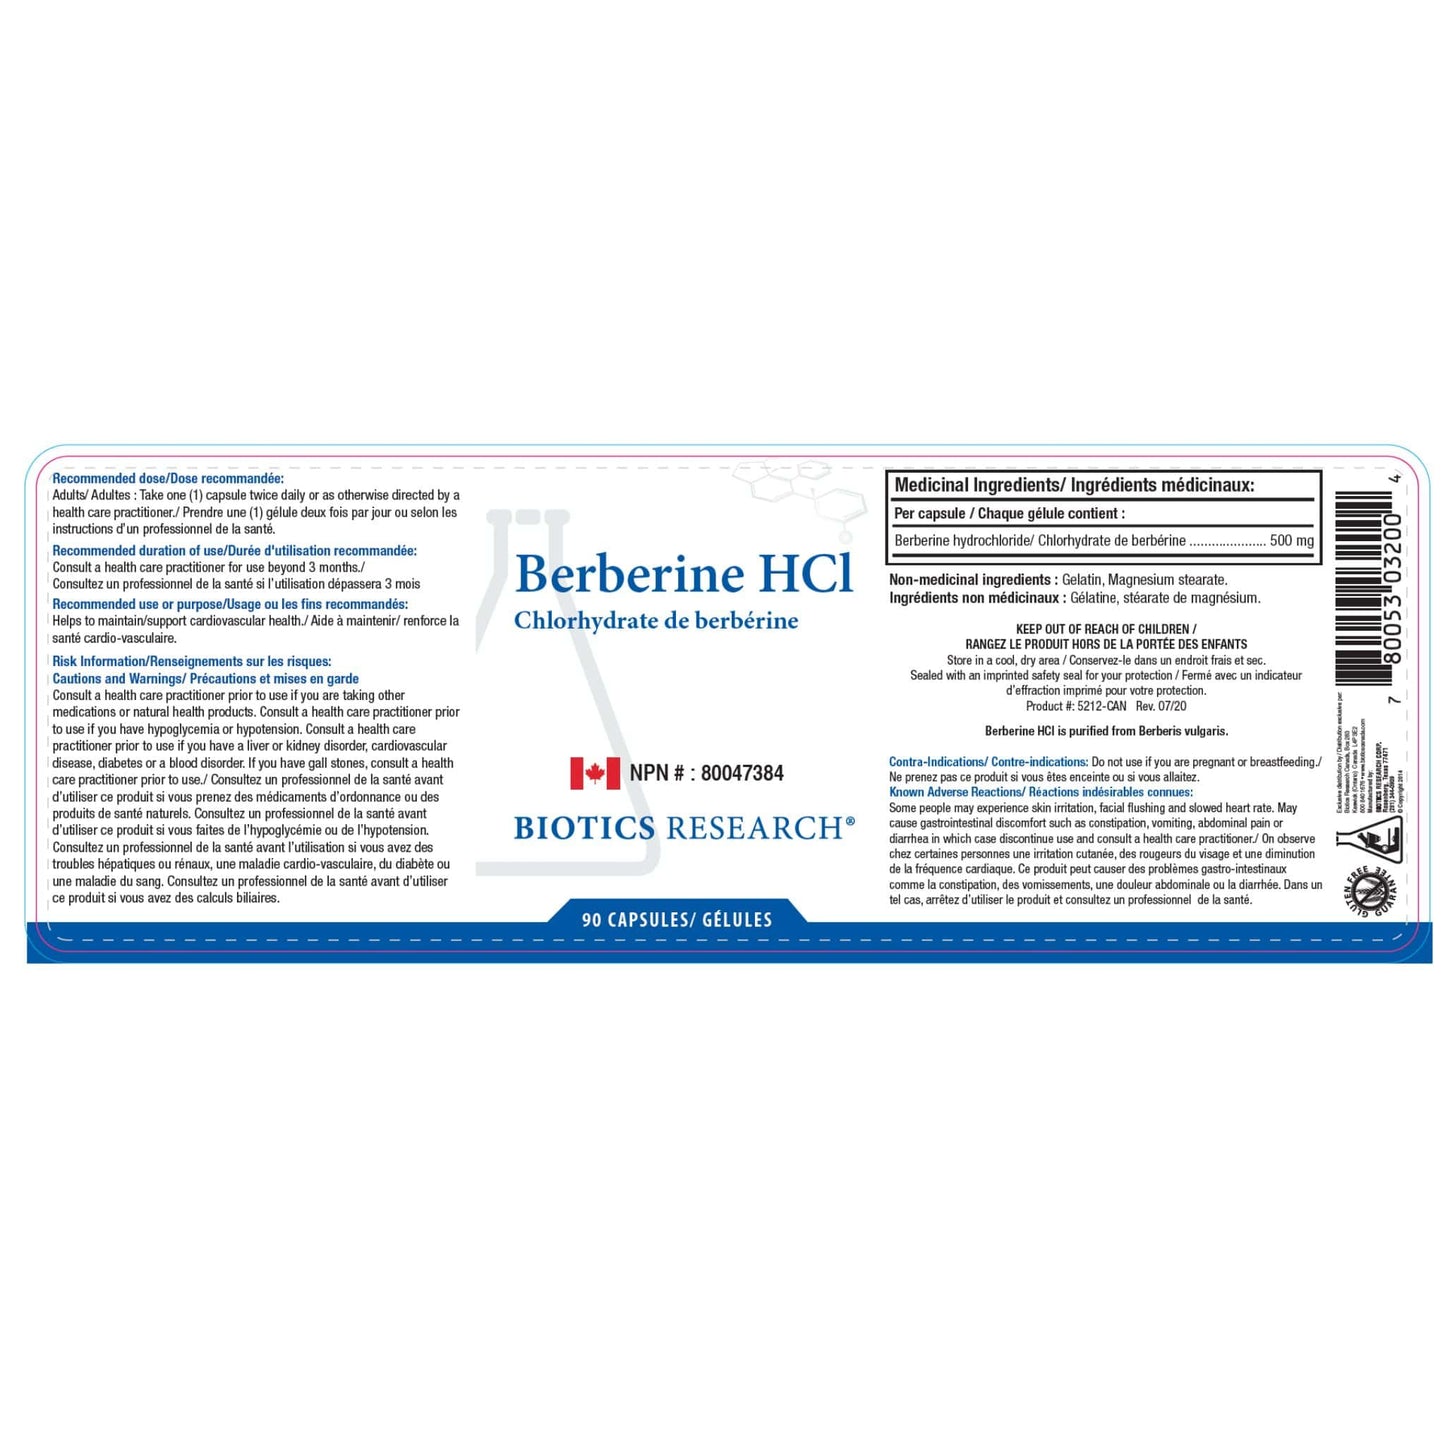 Biotics Research Berberine HCl 500mg, Berberine Hydrochloride, 90 Capsules